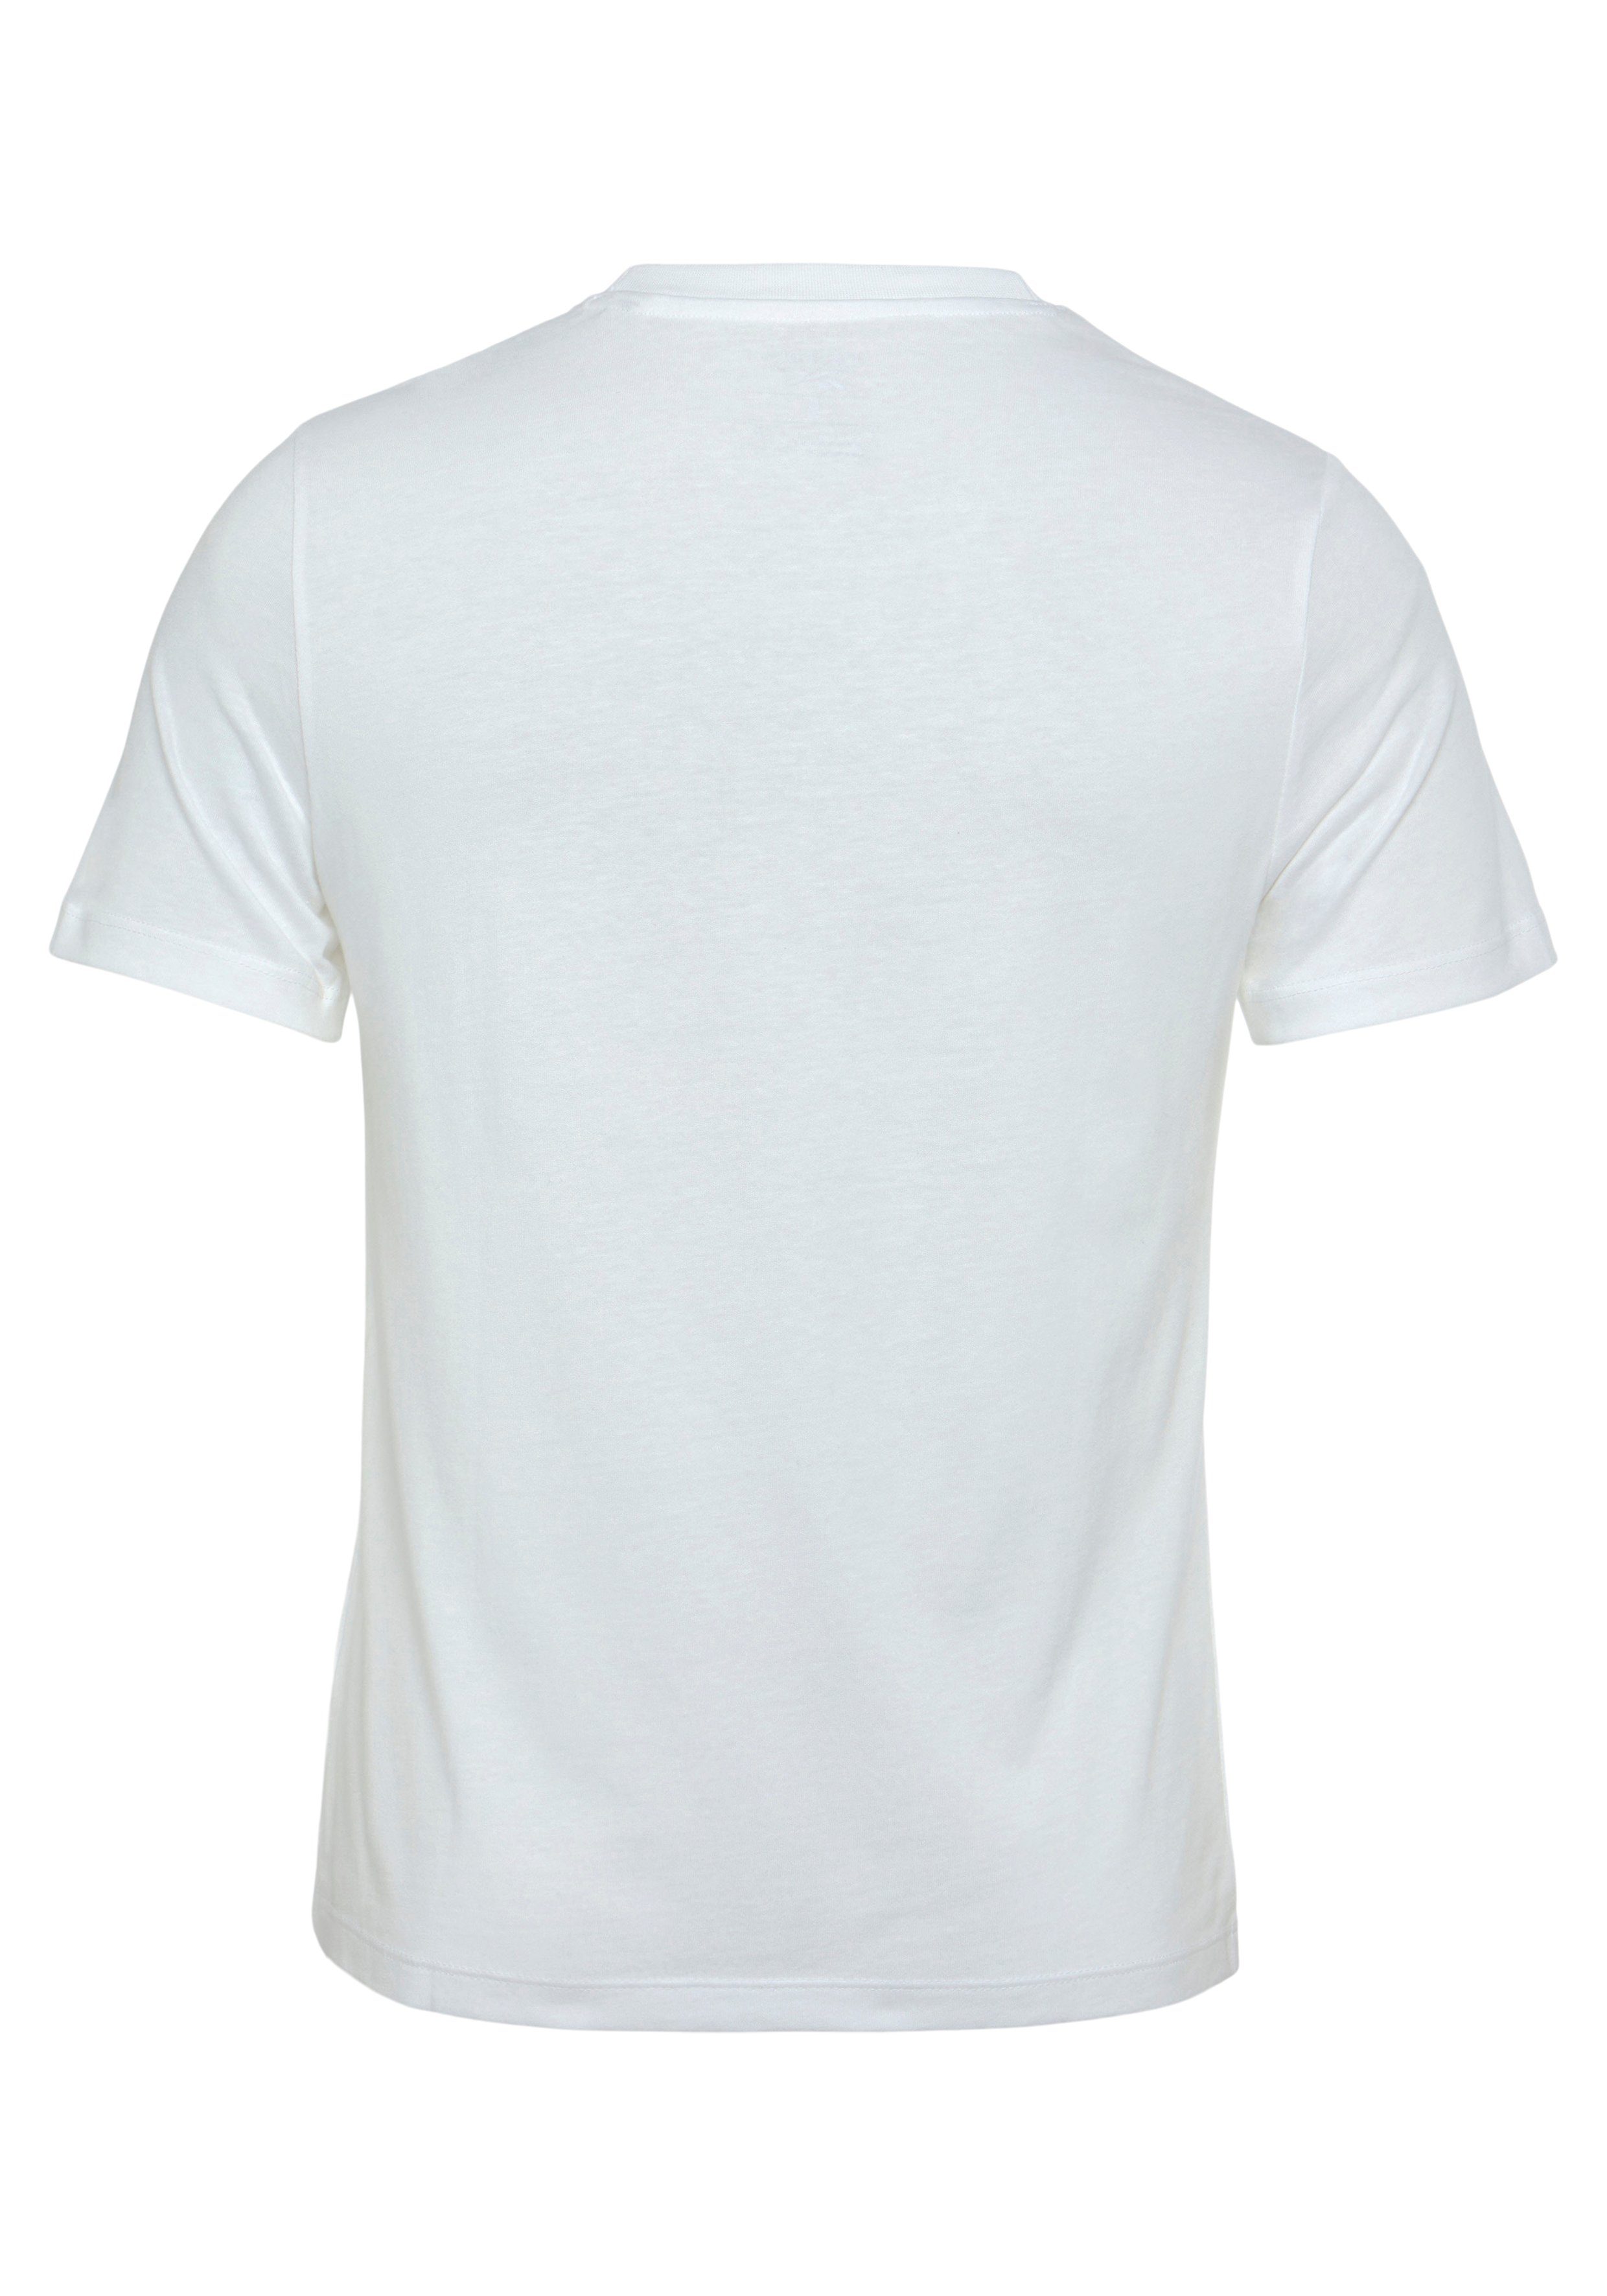 Reebok T-Shirt Reebok white Graphic Tee Read